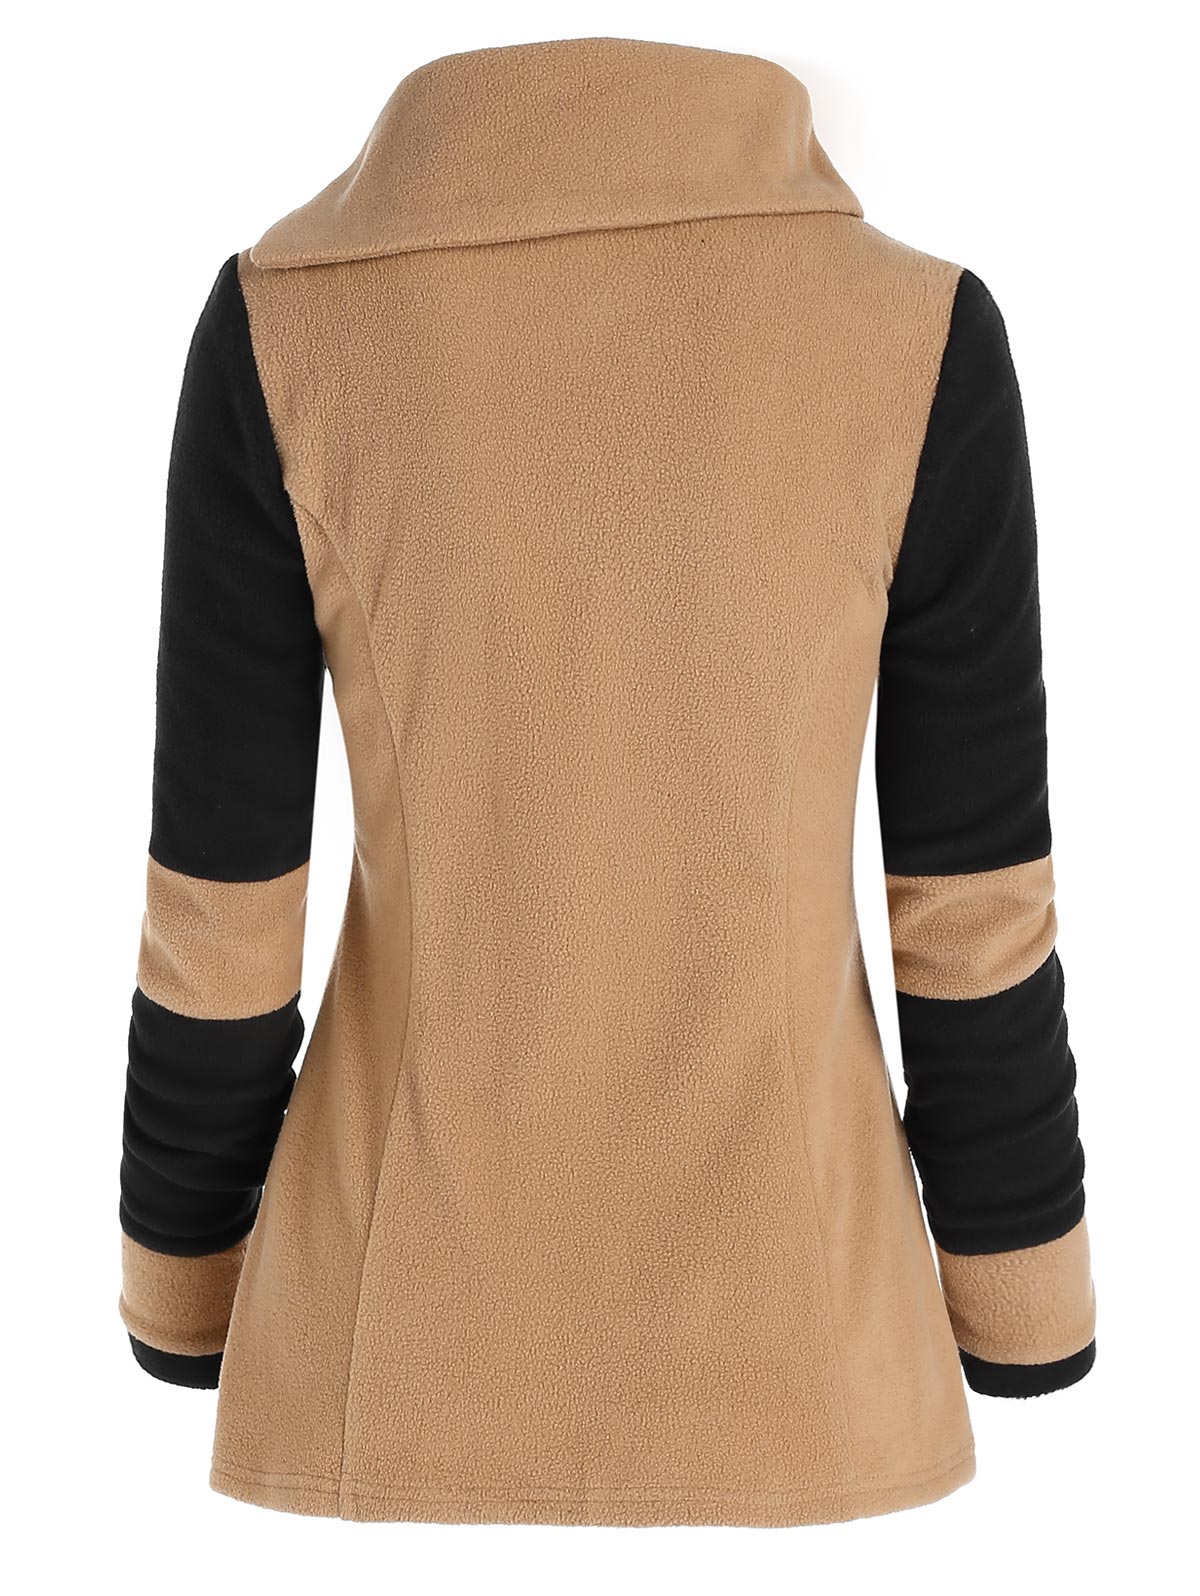 come4buy.com-Fleece куртка Толук жең жылуу пальто